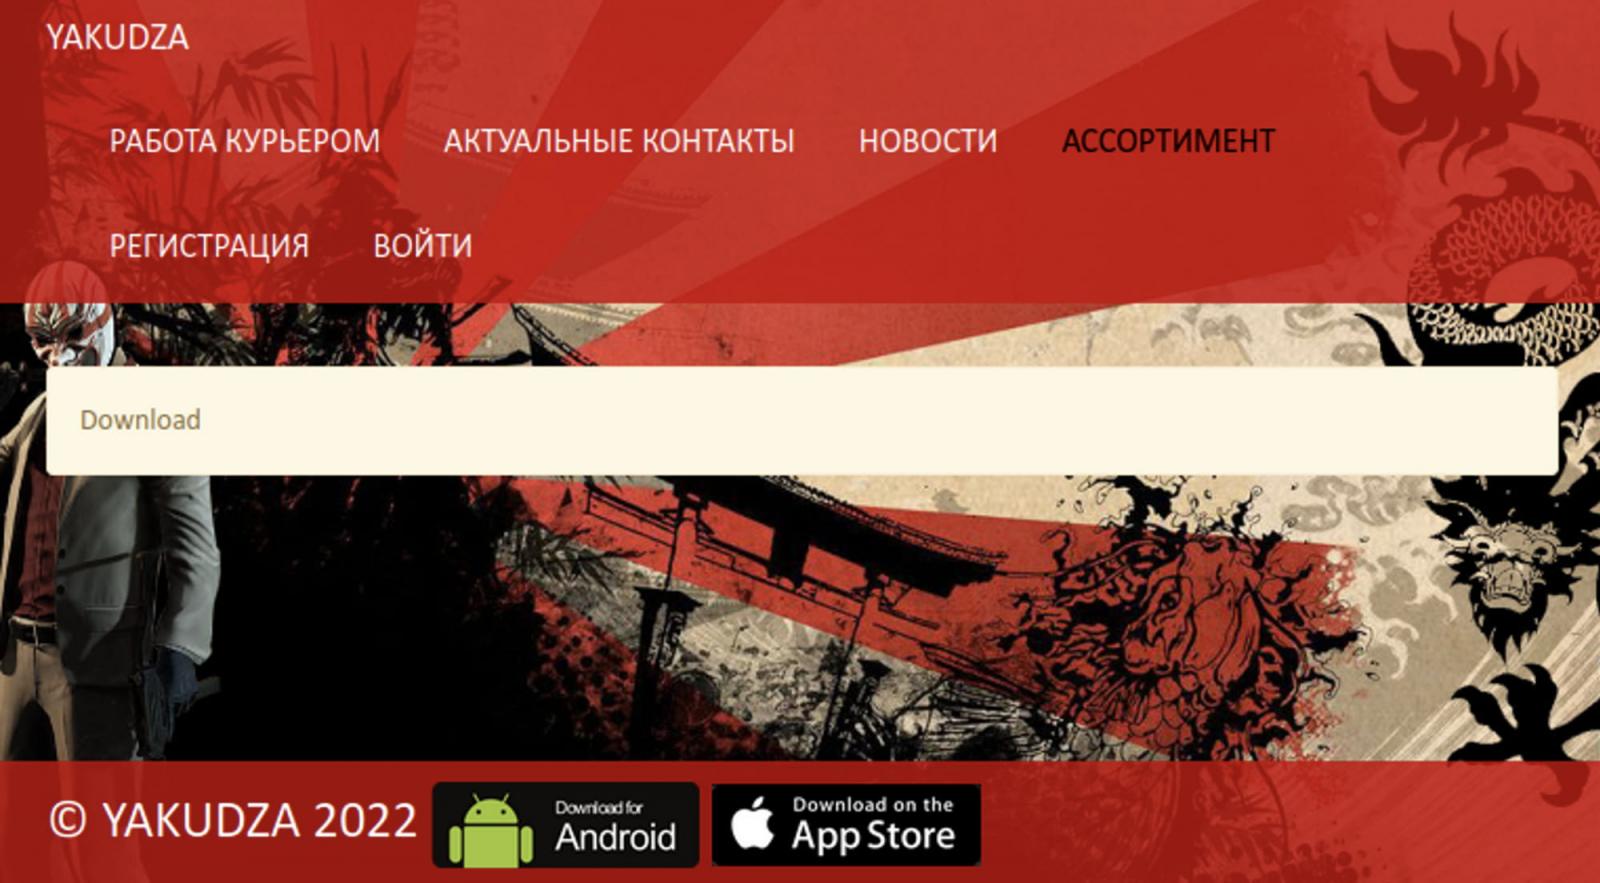 Yakudza promotes its Android app